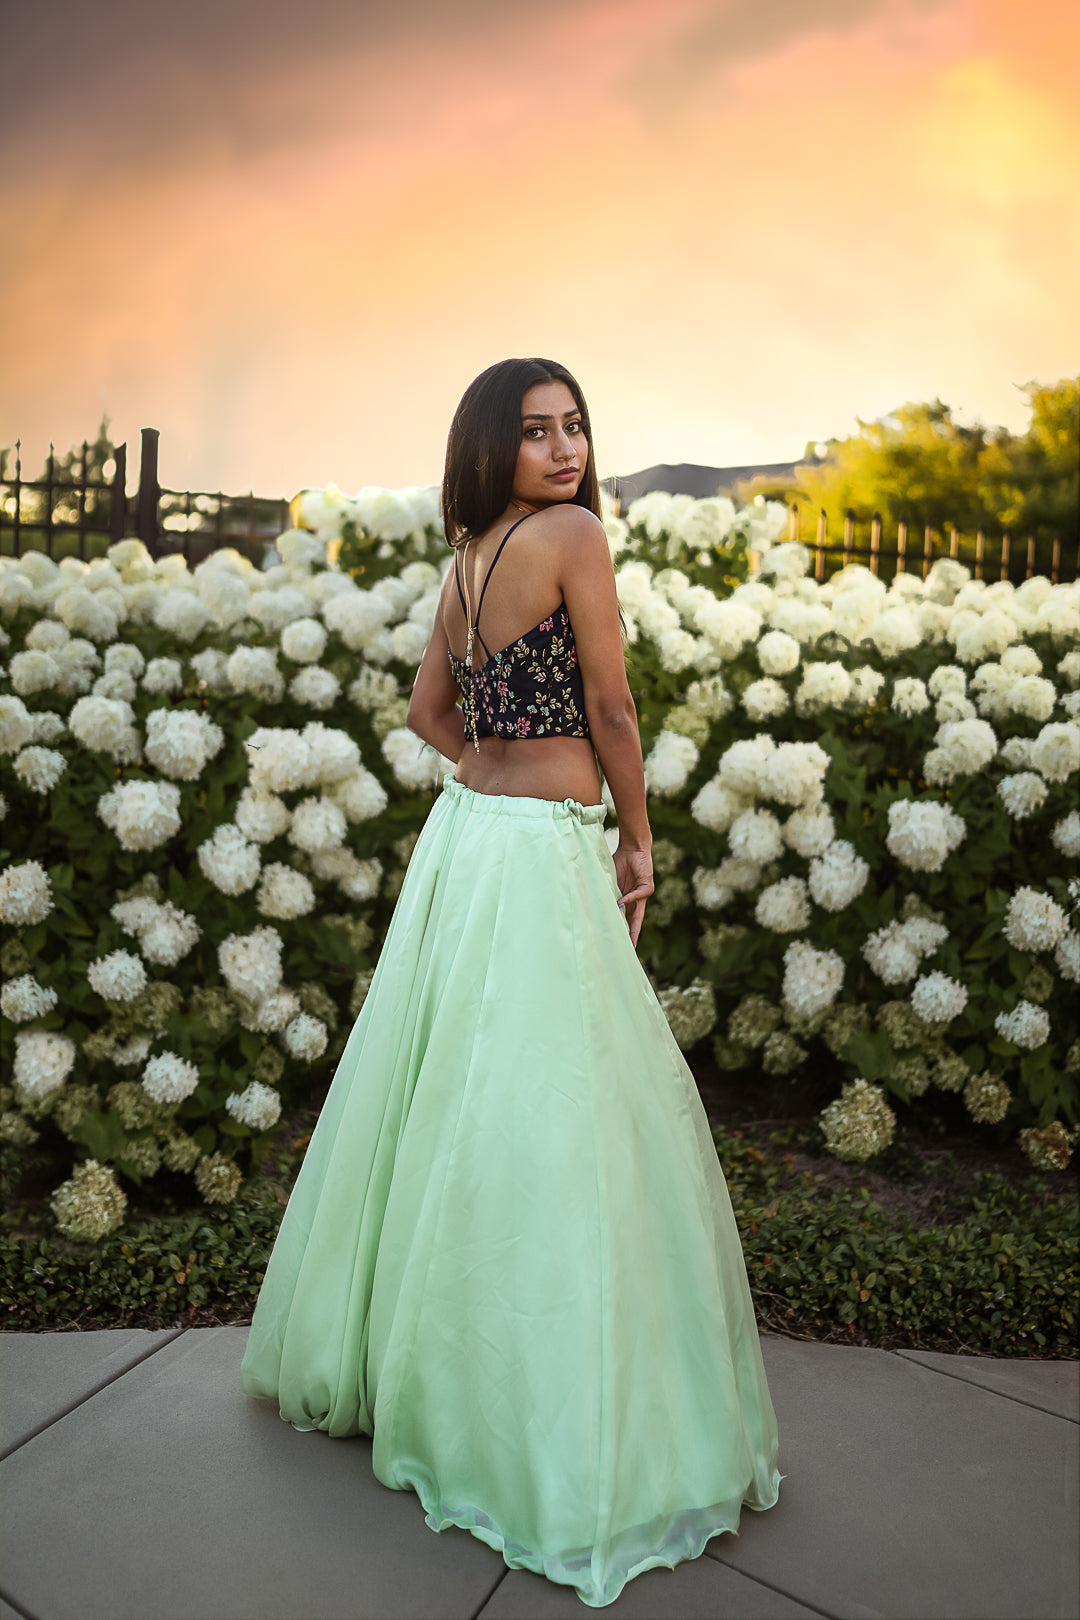 Top Designer Indo - Western Crop Top Skirt - Online Indian Clothing Store USA - Sushma Patel